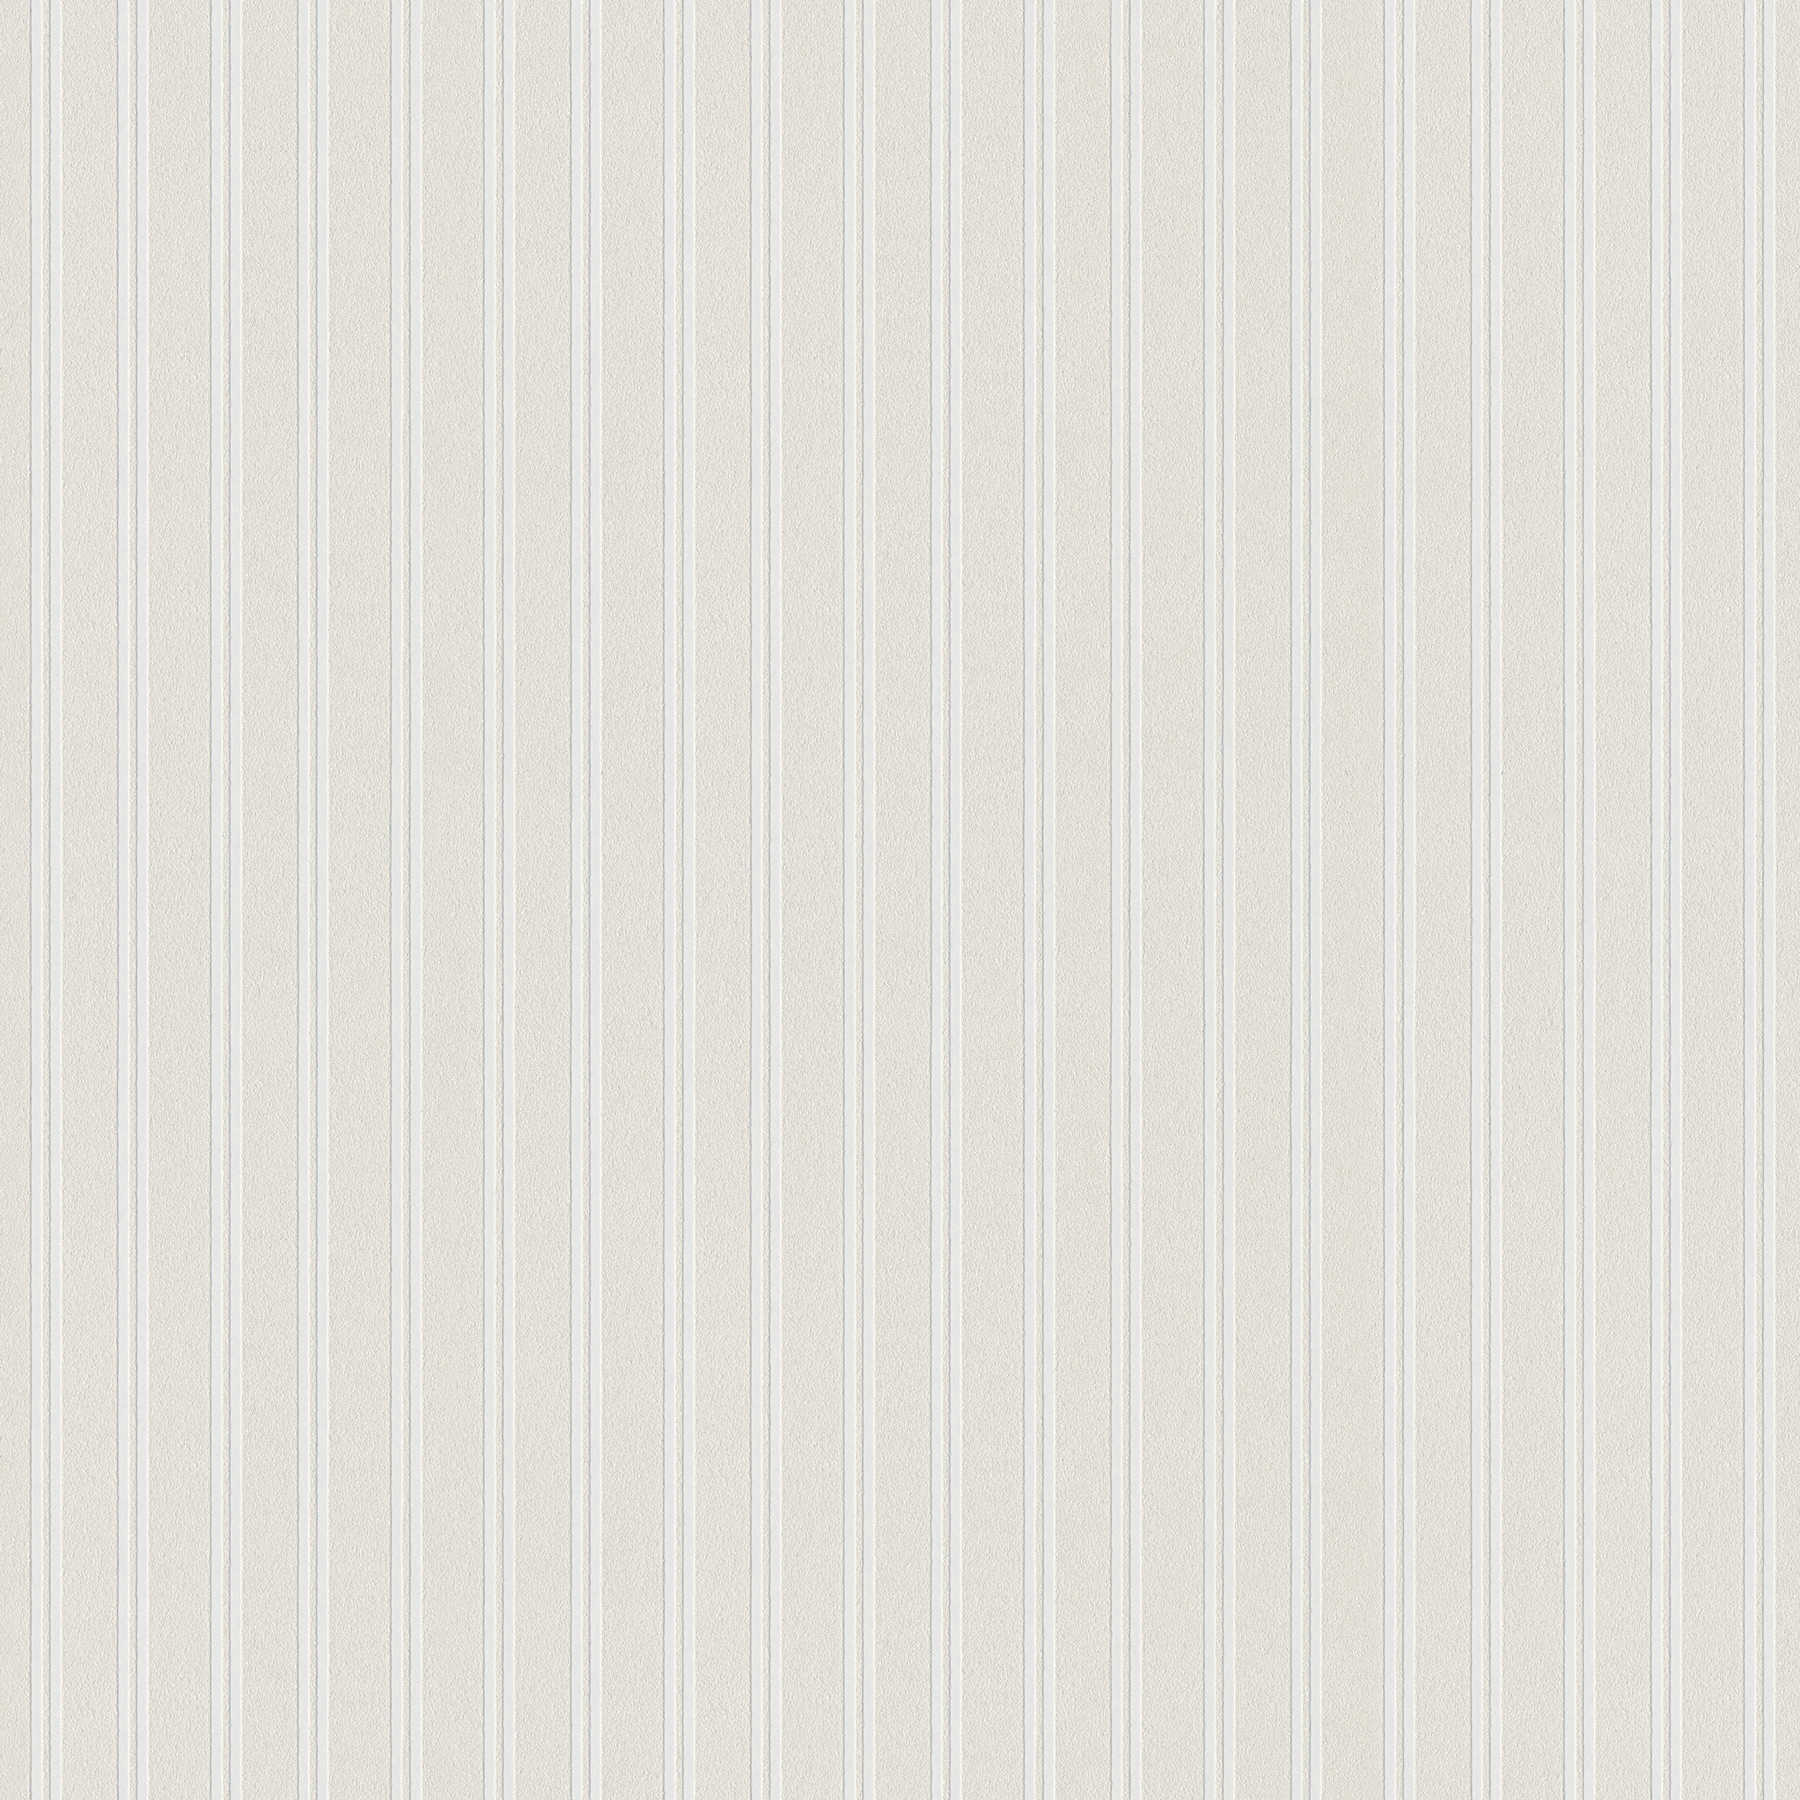 Cream white non-woven wallpaper with textured stripes design
